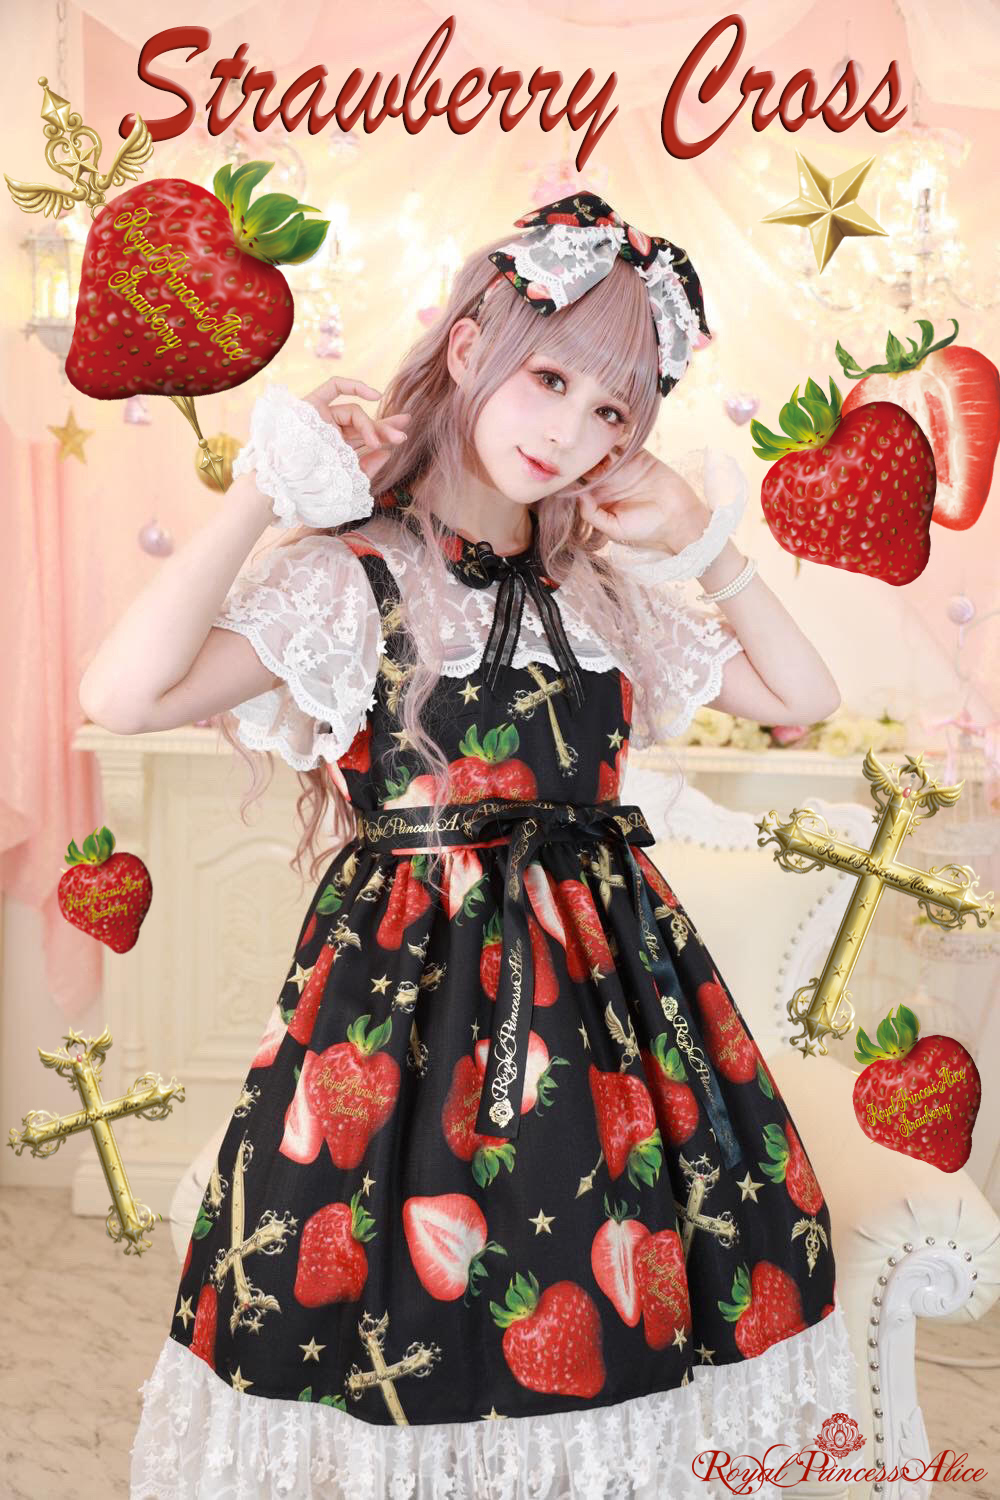 Strawberry Crossワンピース(黒)【6月中旬より随時発送予定】